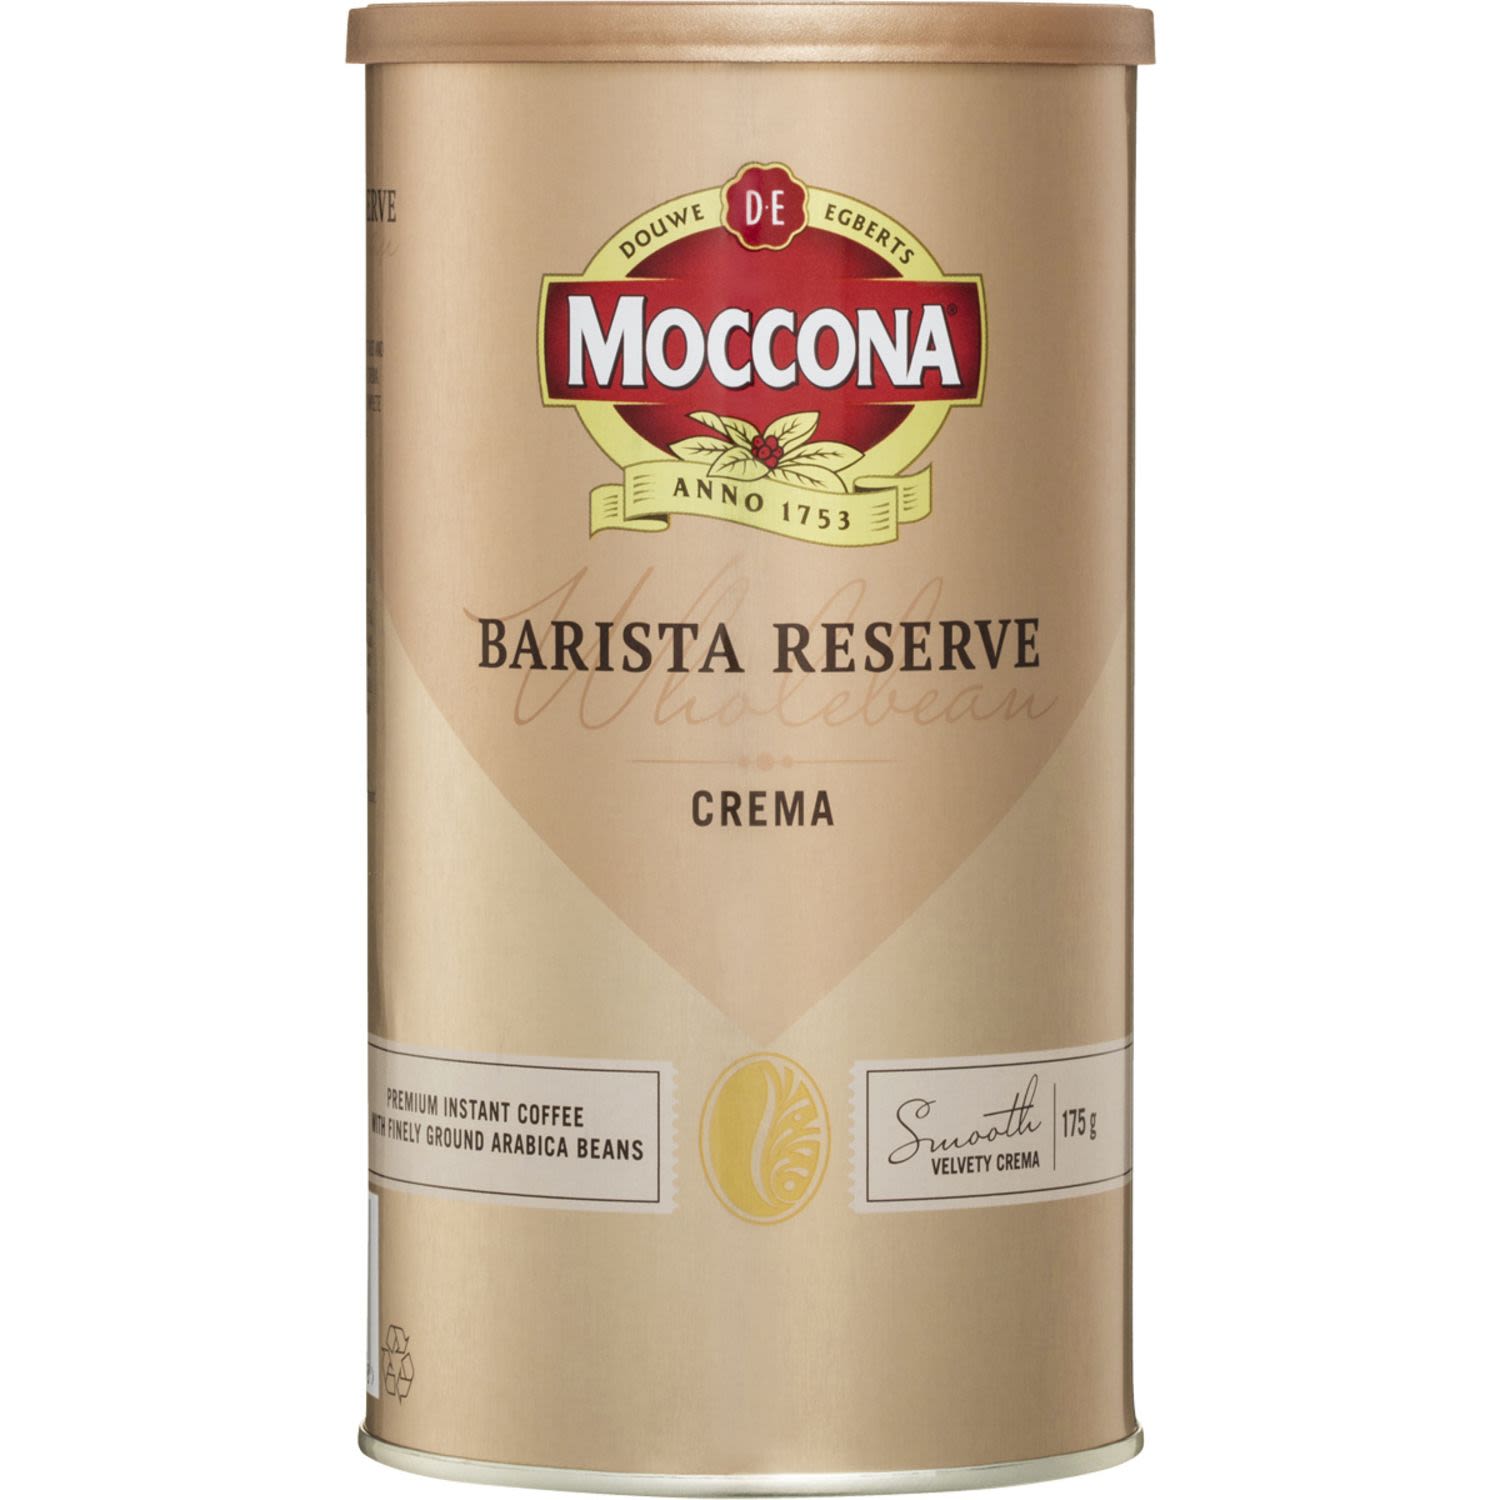 Moccona Barista Reserve Crema, 175 Gram